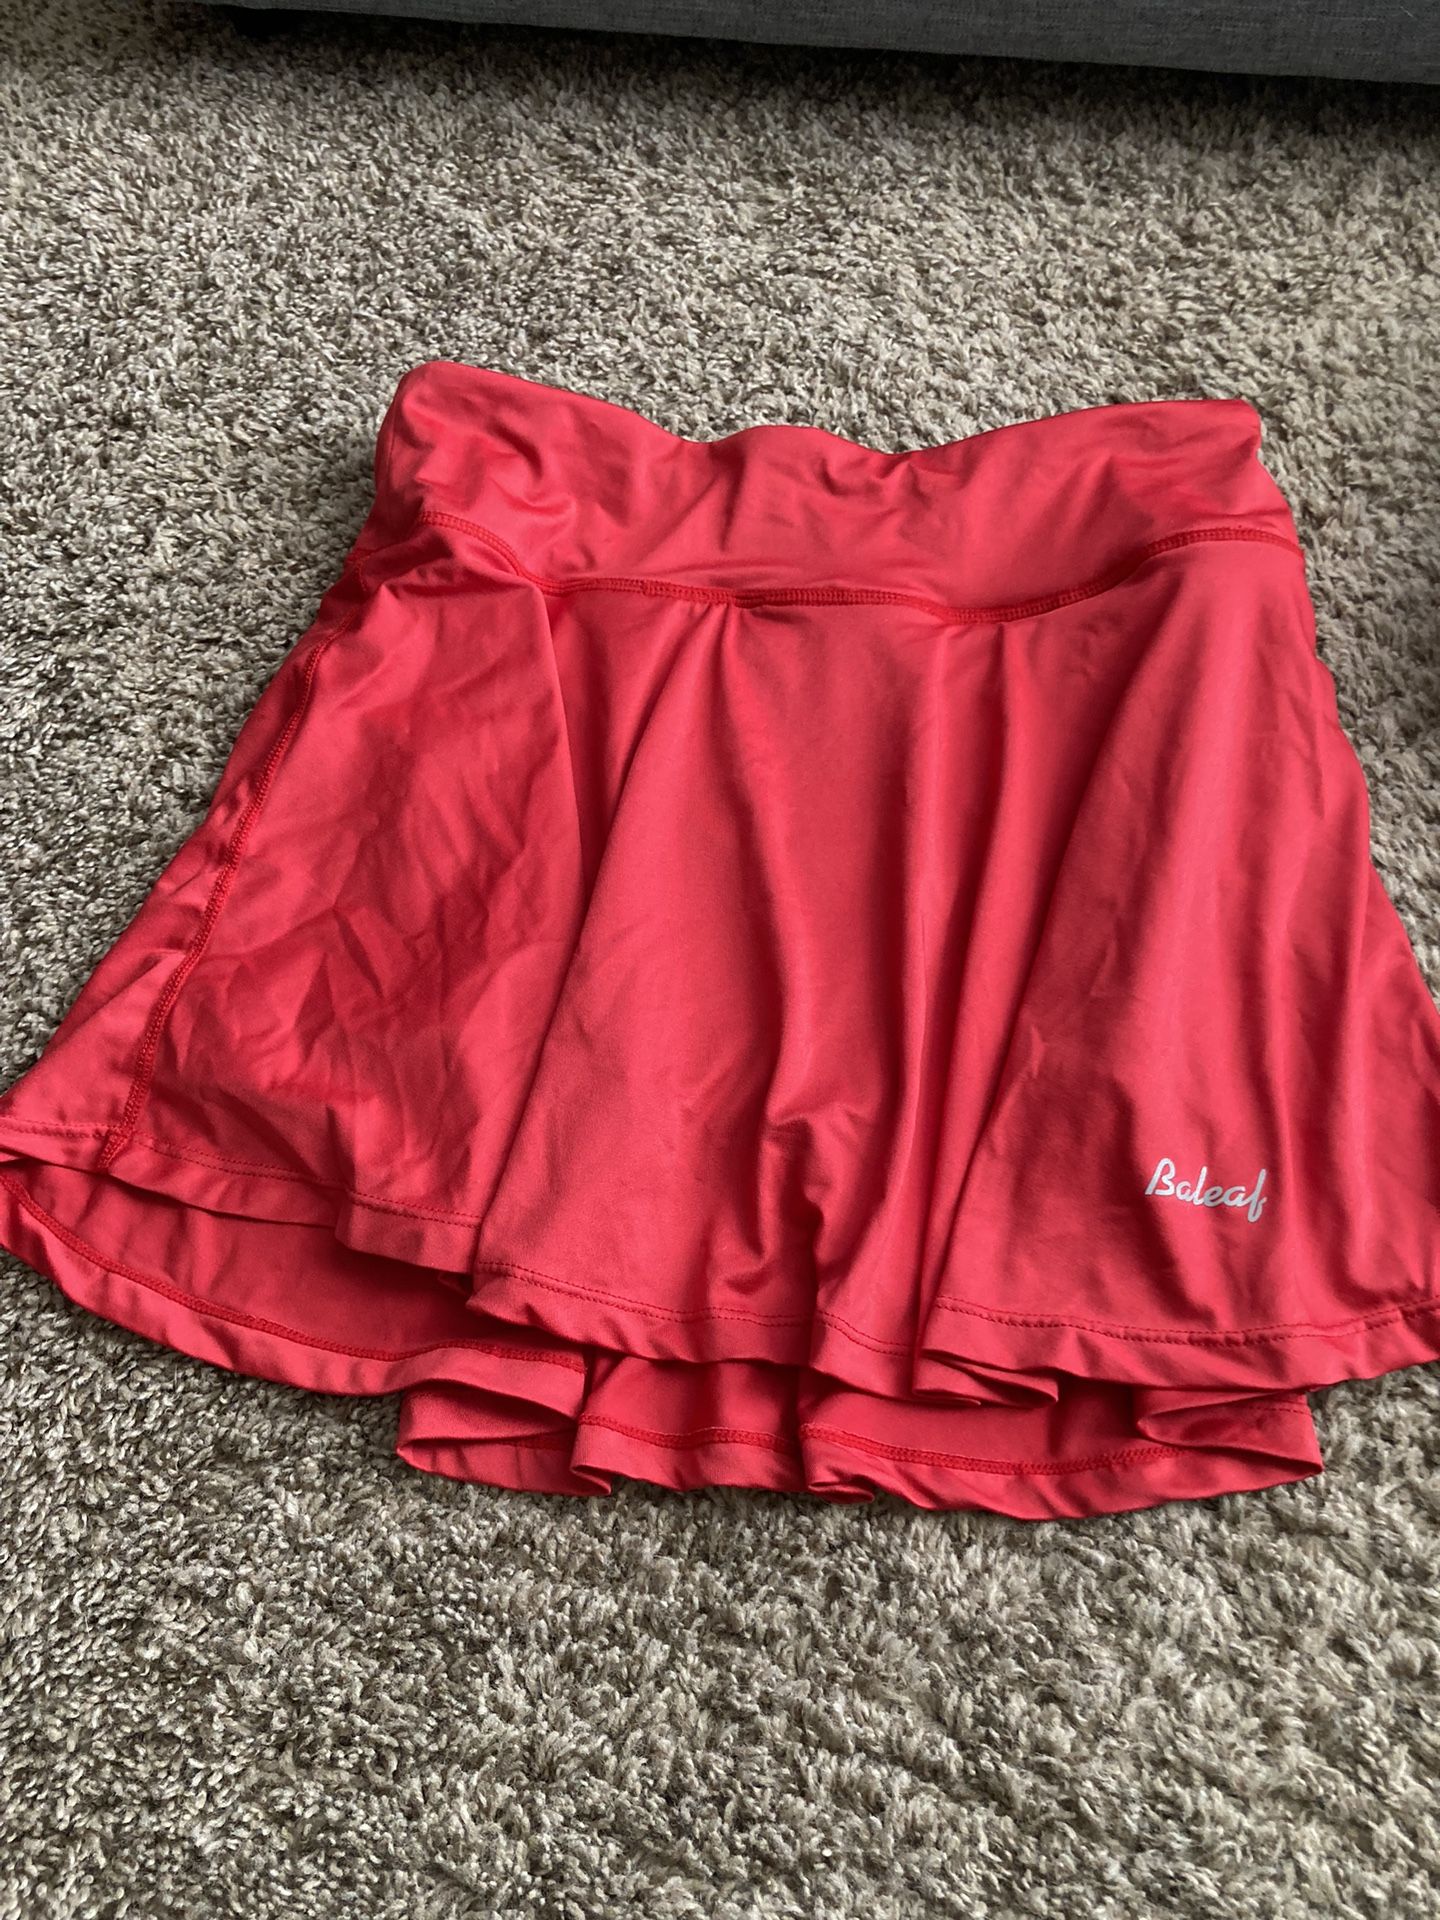 Baleaf Red Skirt Size M